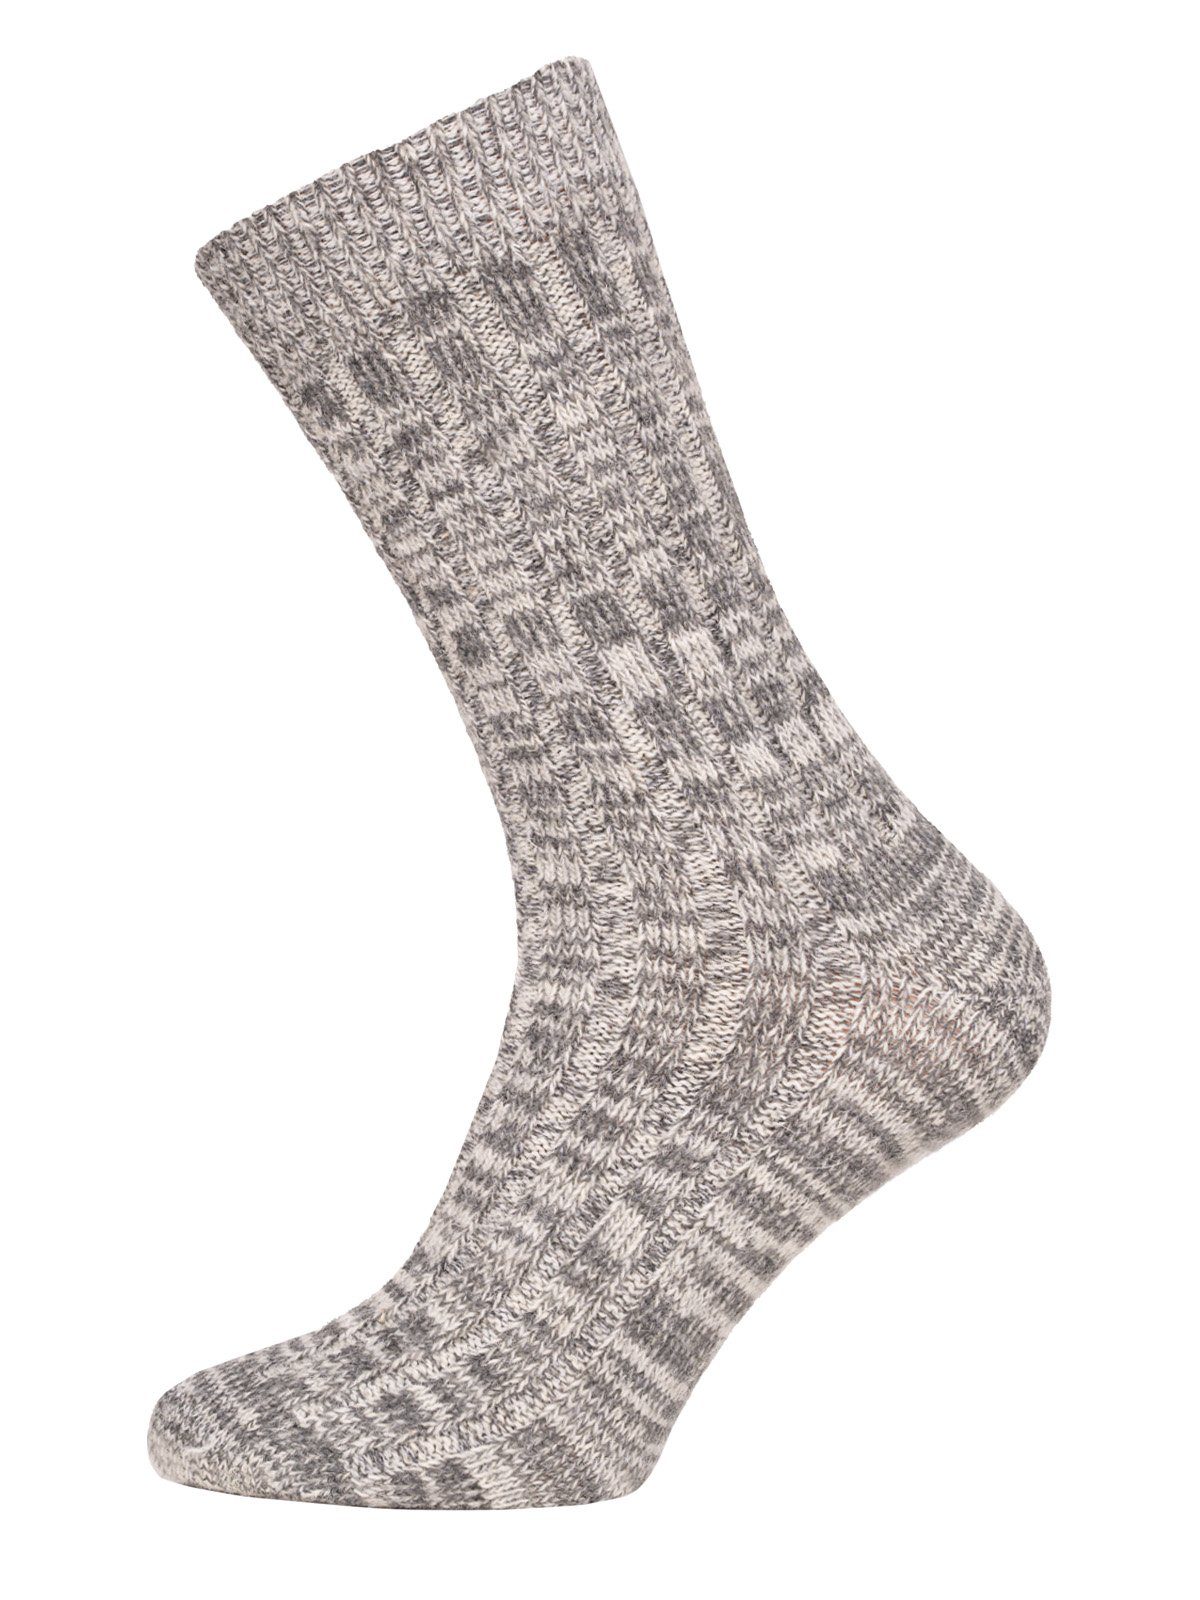 HomeOfSocks Socken Melierte Wollsocken aus 75% Wolle (Schurwolle) (Paar, 1 Paar) Dünne und warme Wollsocken mit 75% Wollanteil